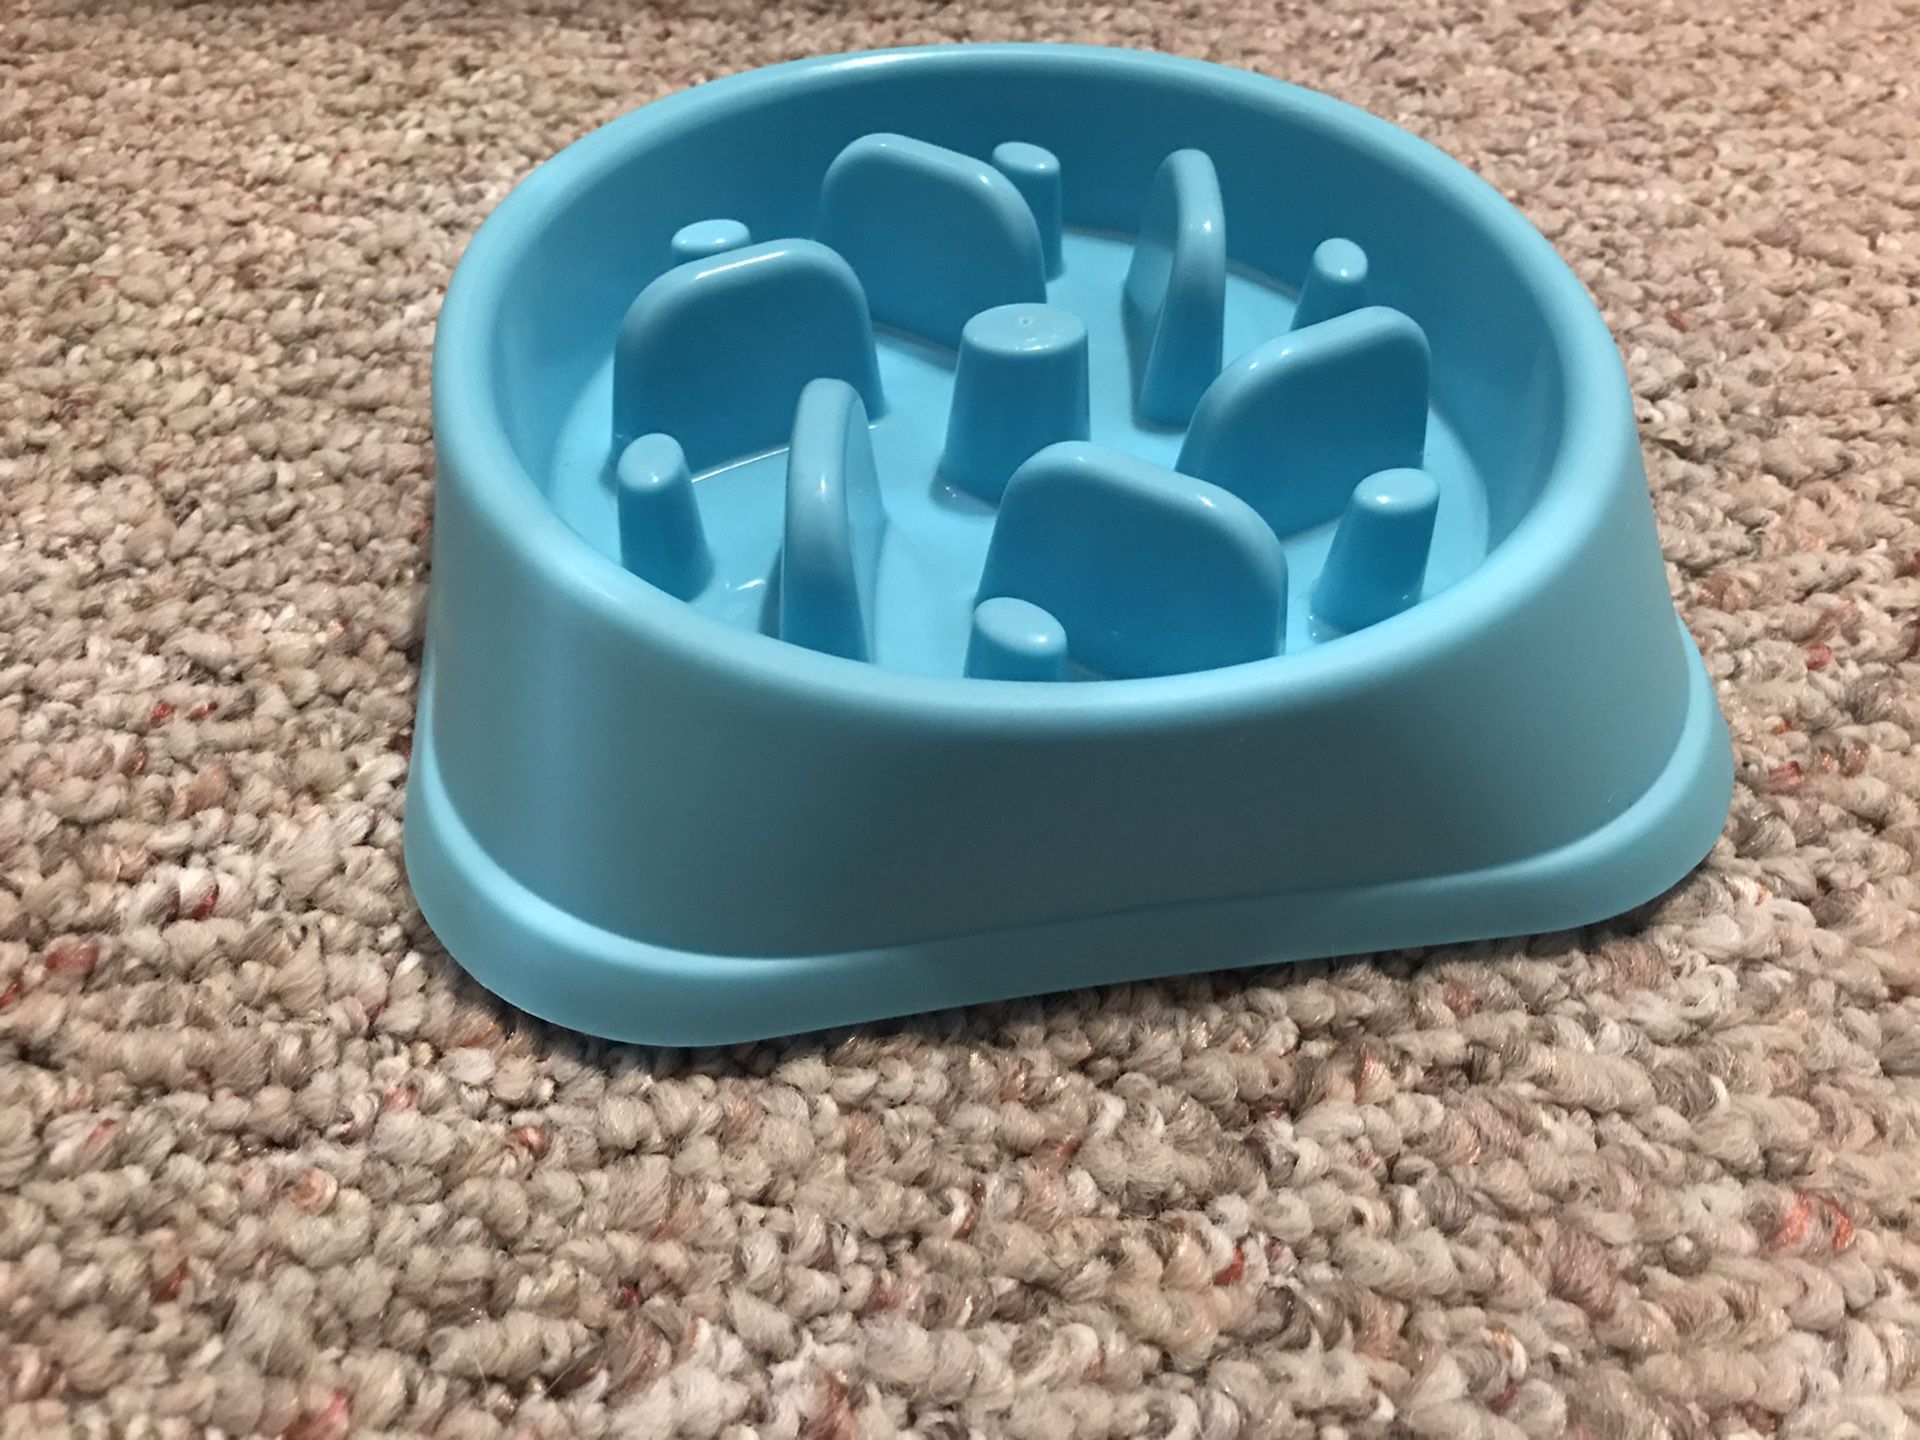 Pet slow eating puzzle bowl